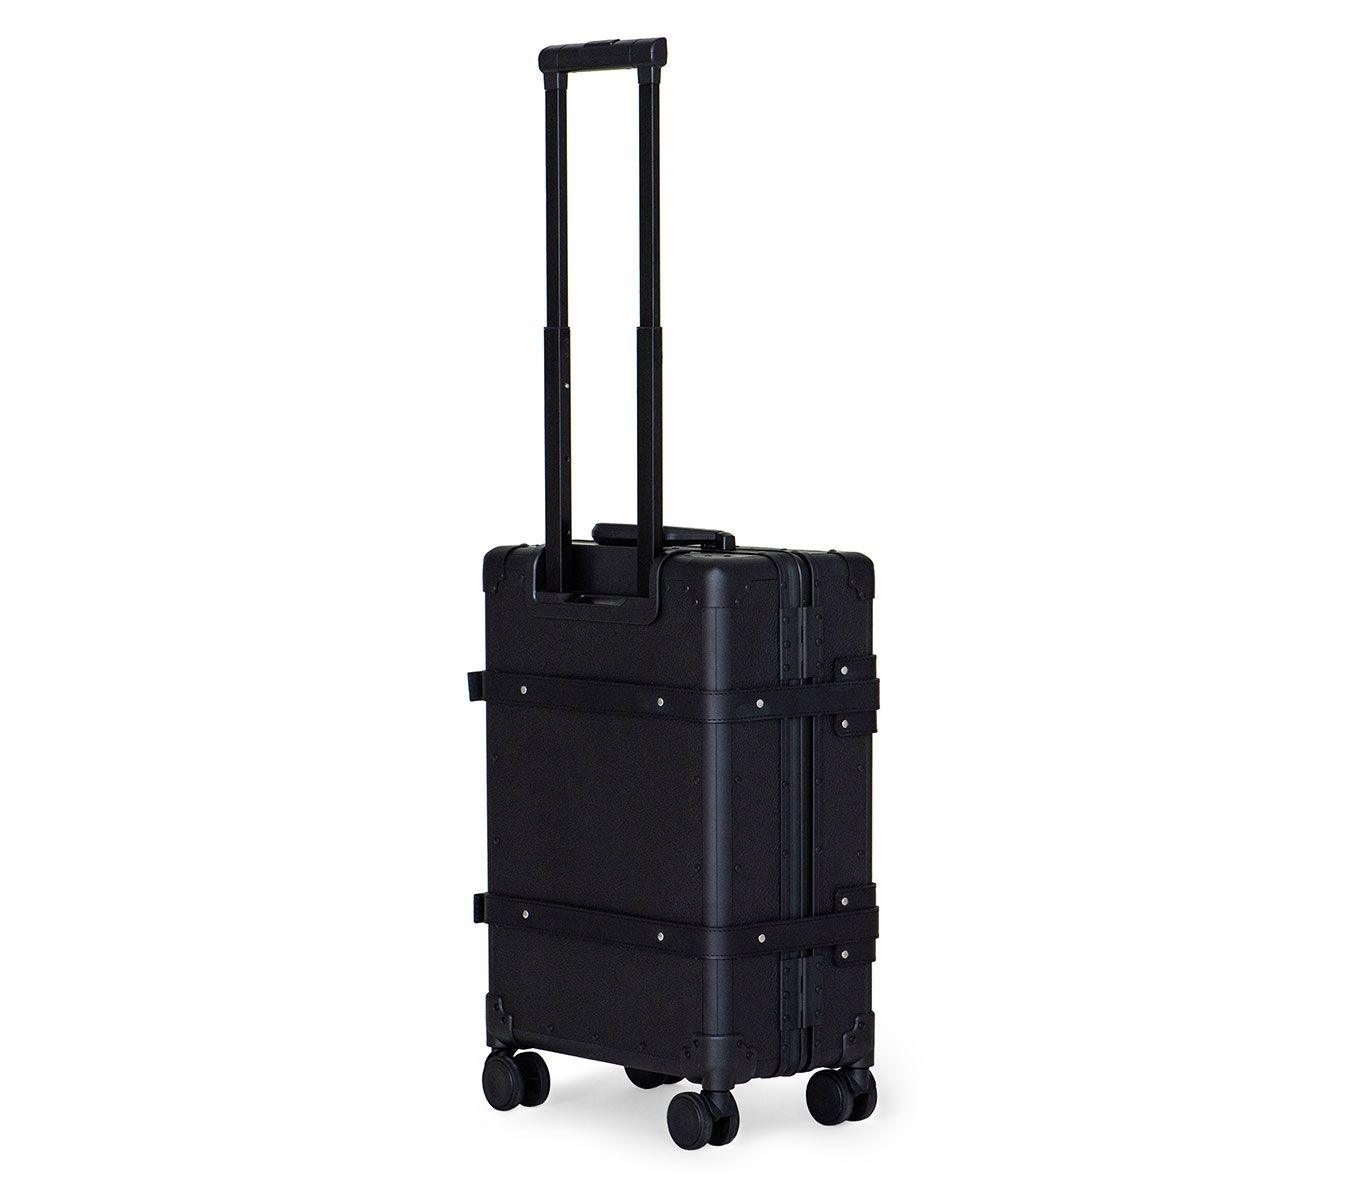 Buy Blue Luggage  Trolley Bags for Women by 3G Online  Ajiocom